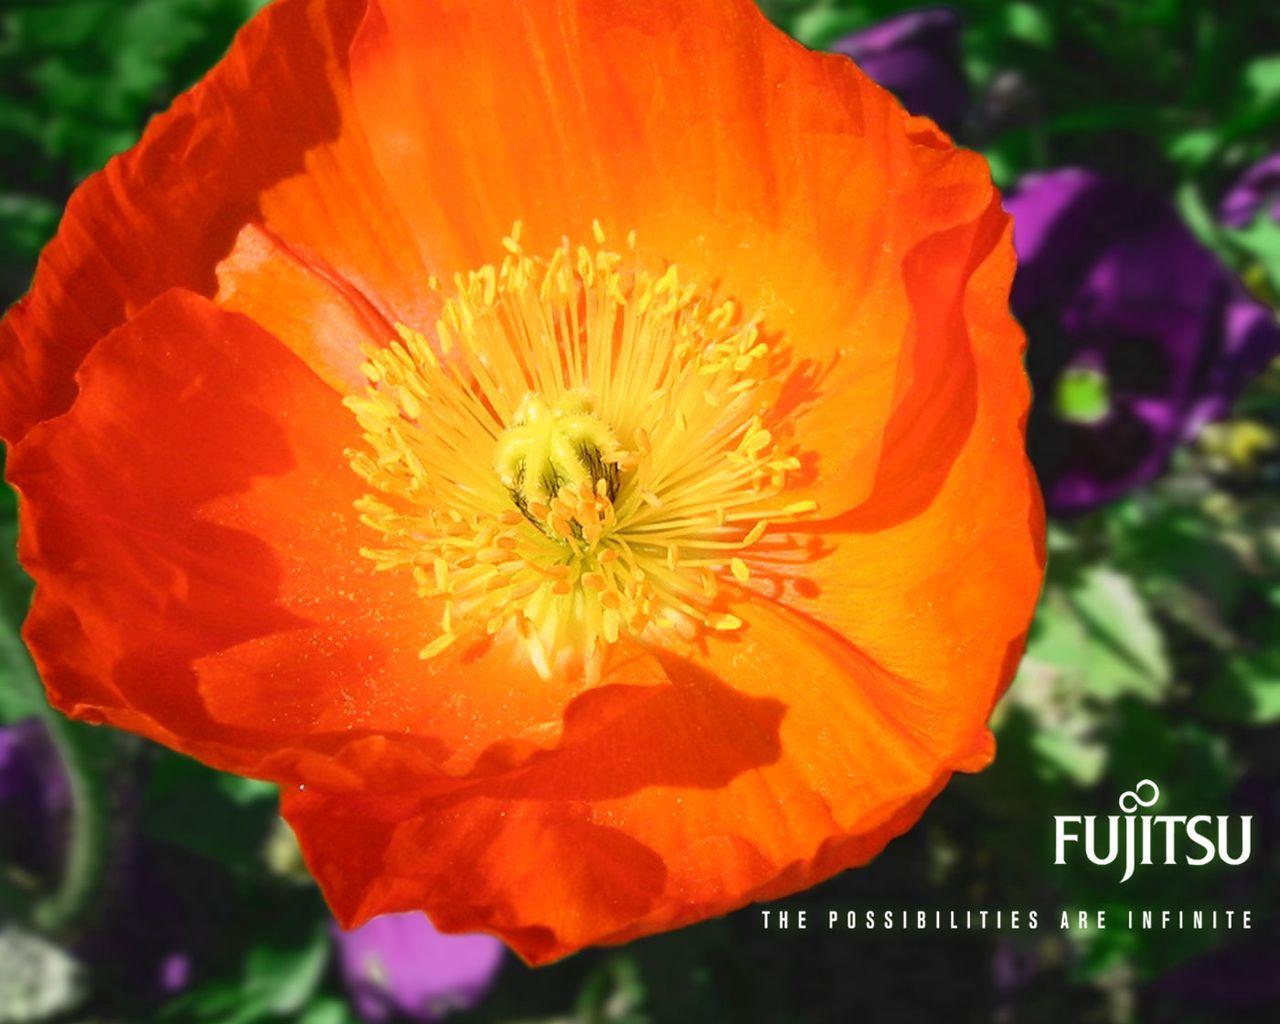 Fujitsu flower wallpaper. Fujitsu flower